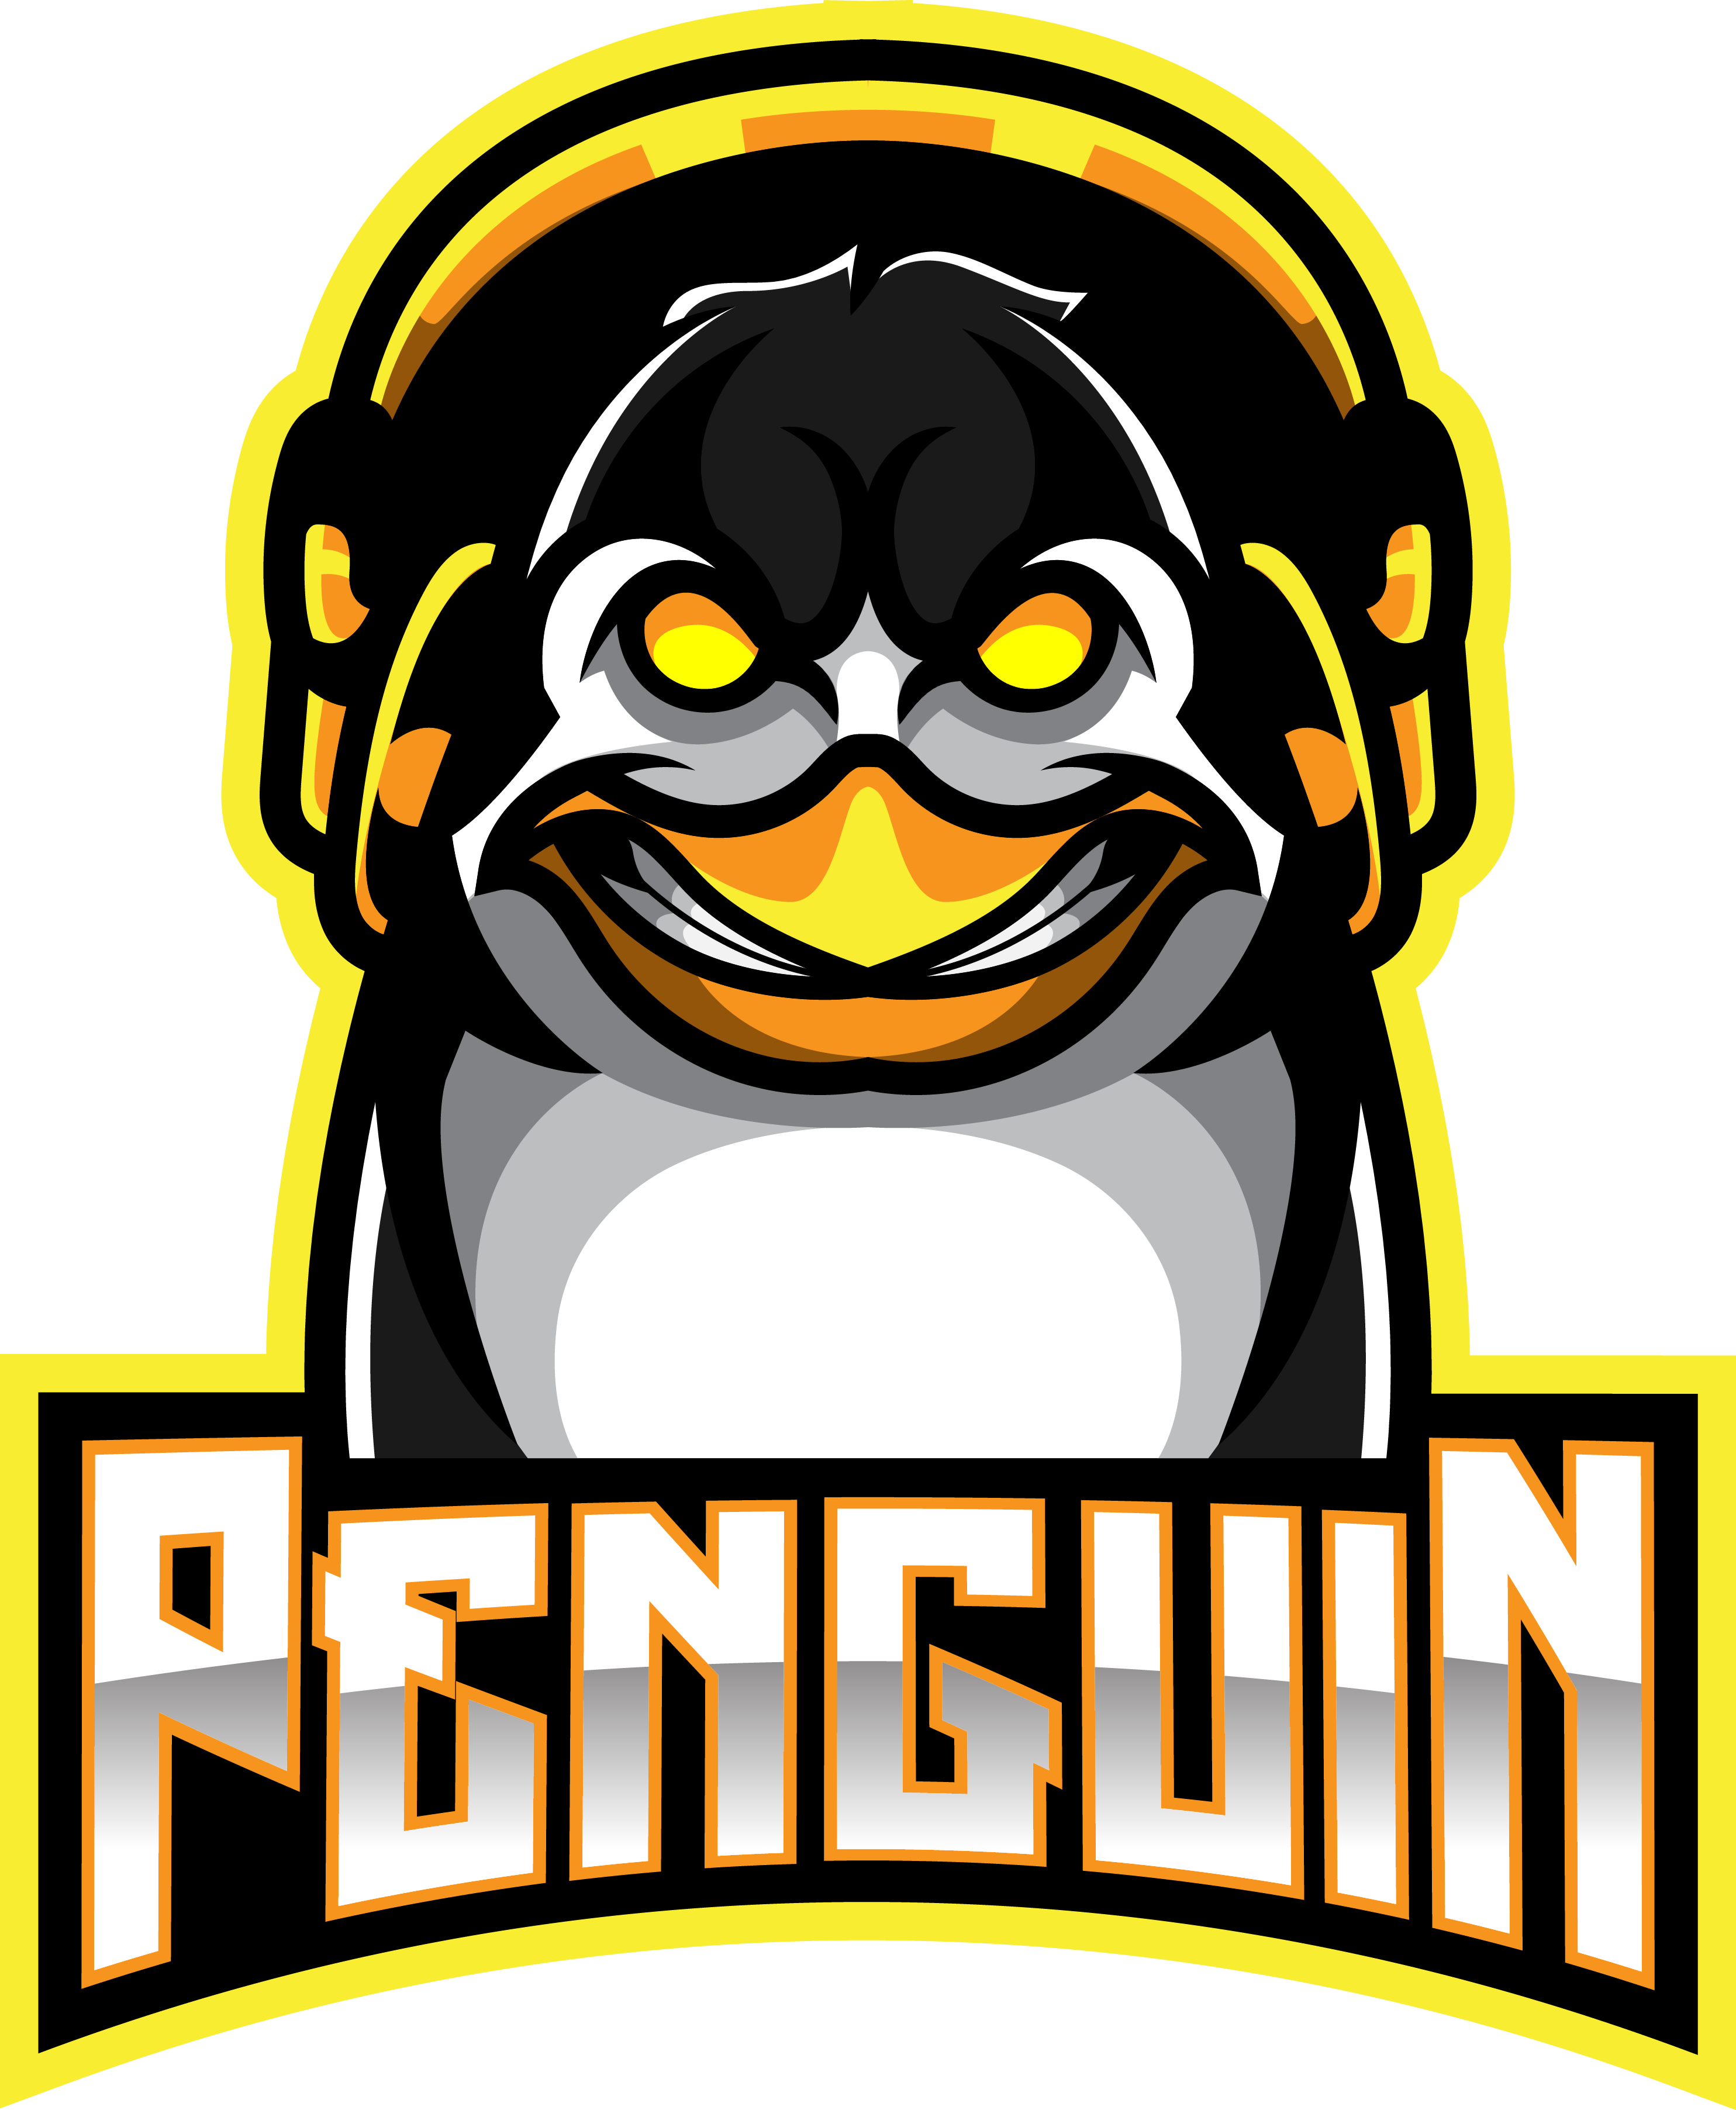 Penguin esport mascot logo design with headphones By Visink